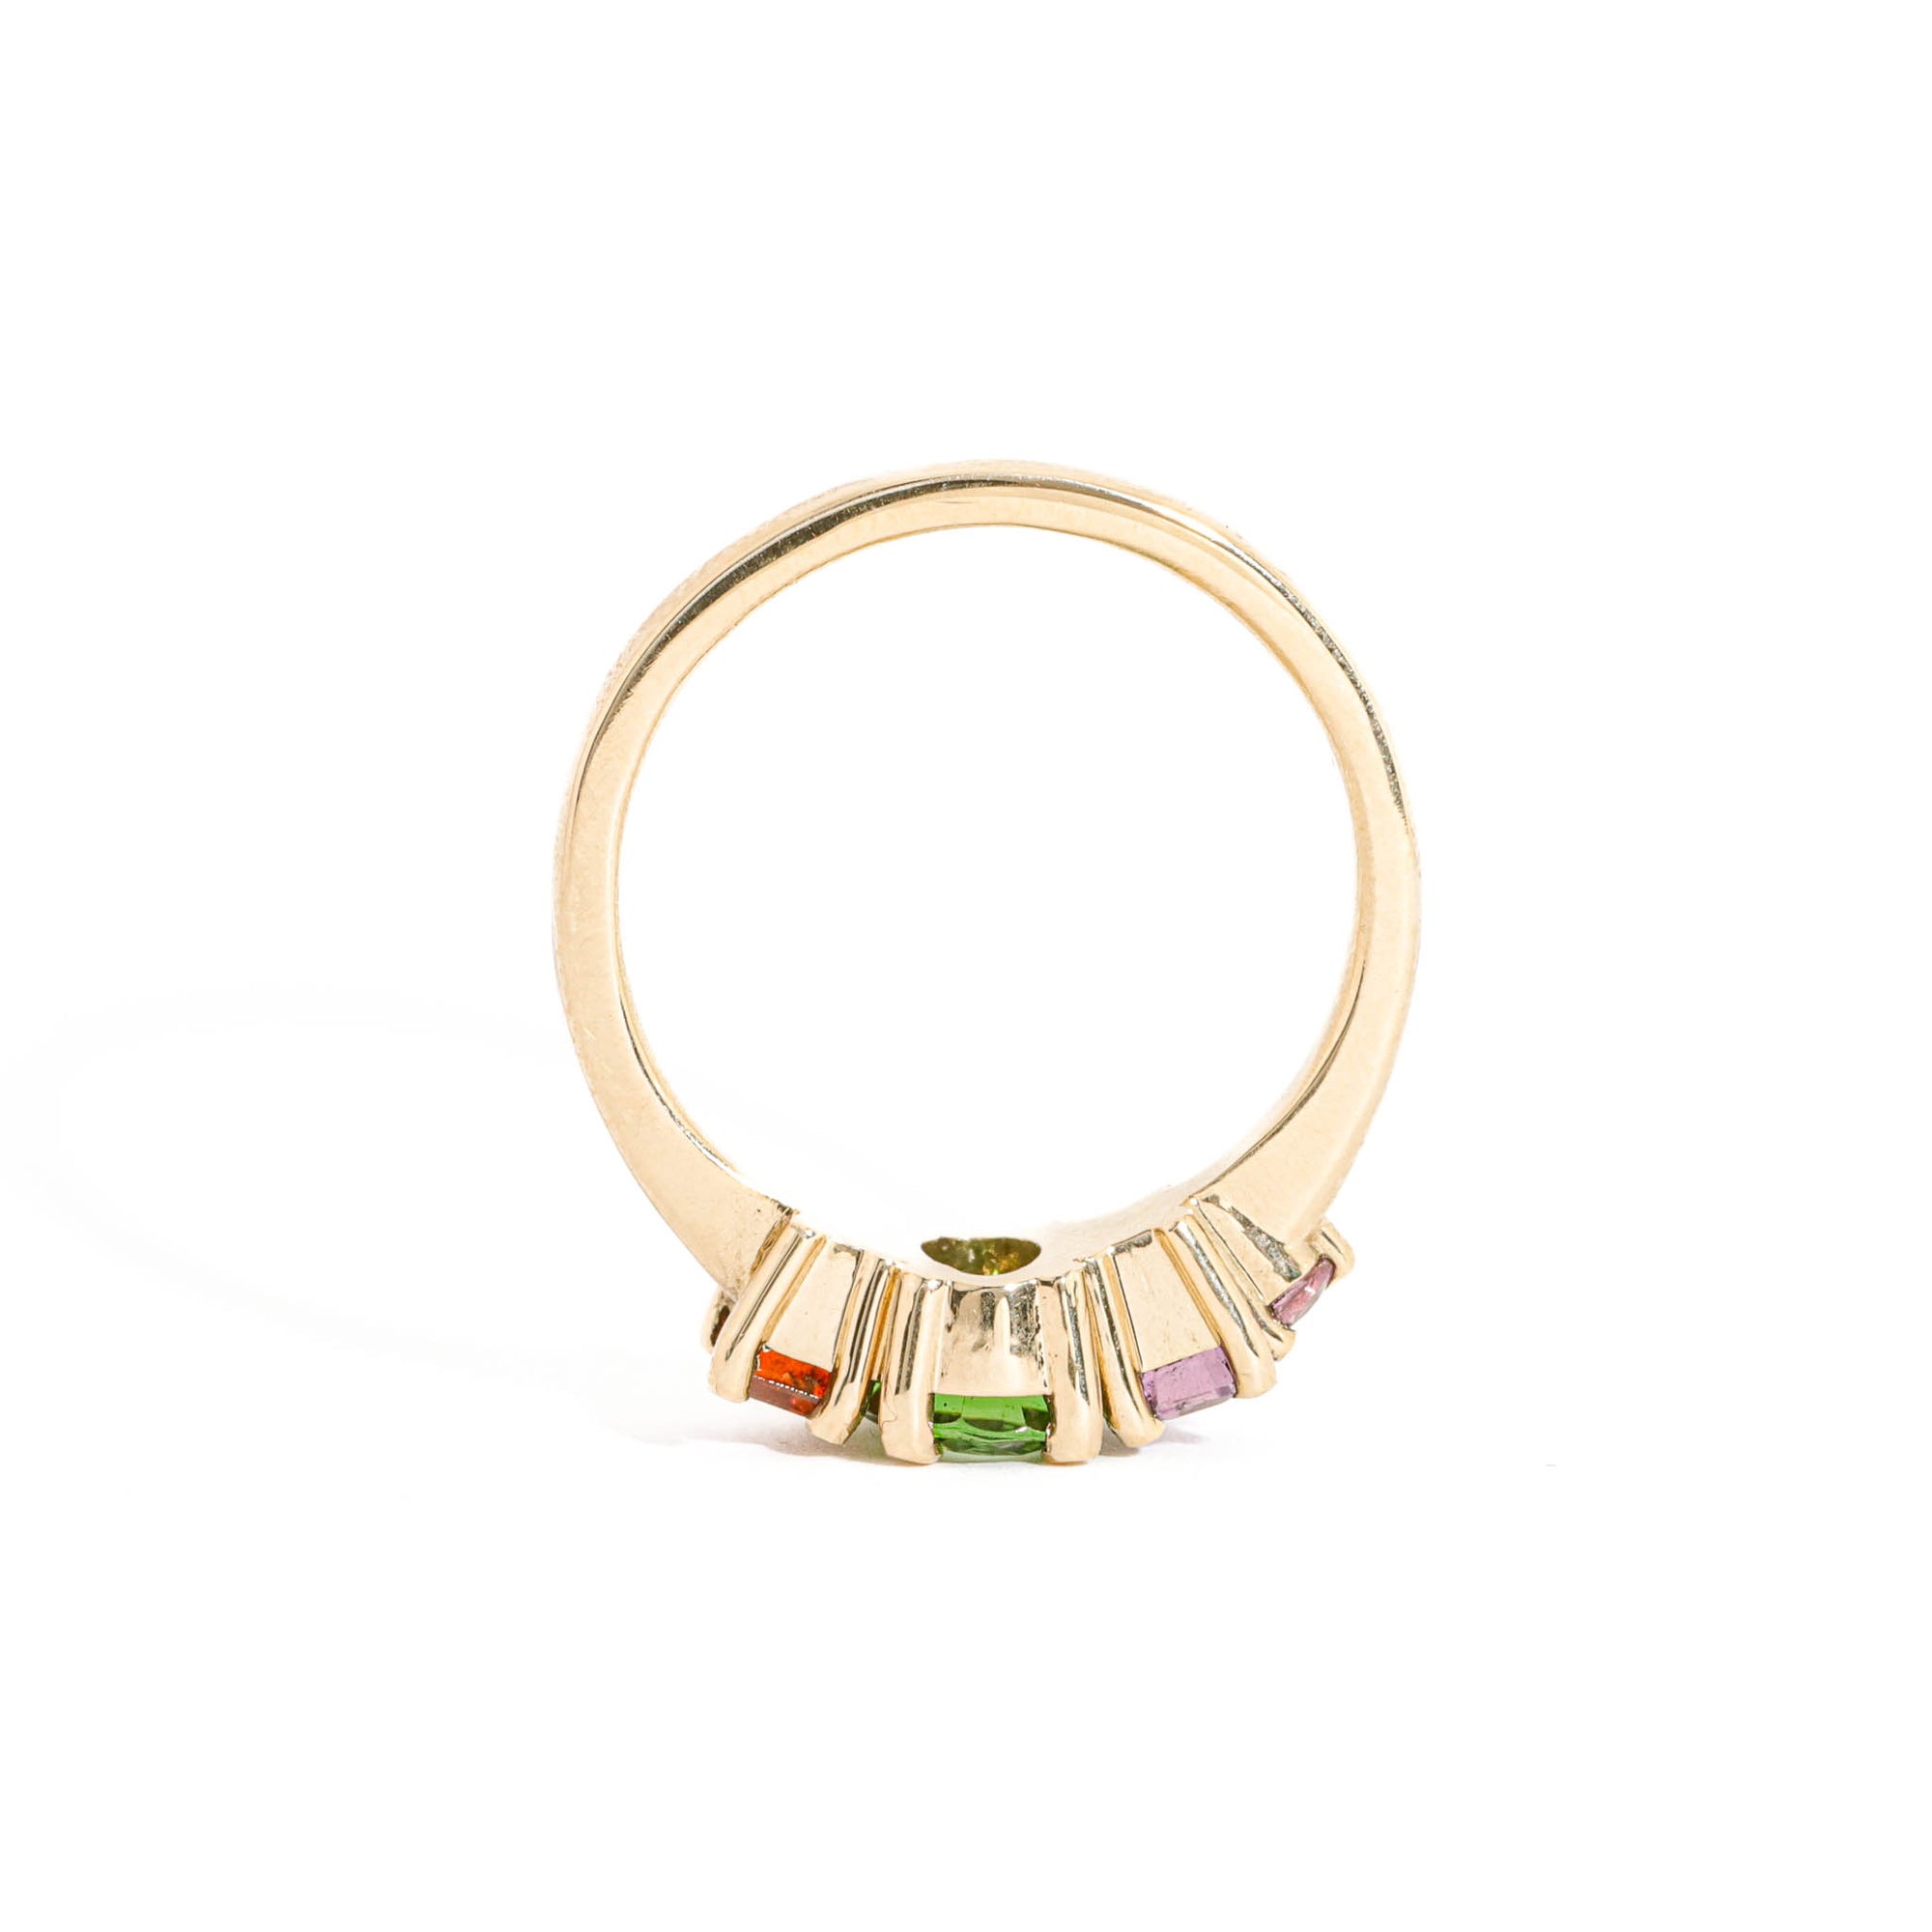 Oval Cut Green Tourmaline, Baguette Cut Orange Sapphire, Round Brilliant Cut Champagne Diamond and Emerald Cut Pink Sapphire Ring in 9 Carat Yellow Gold